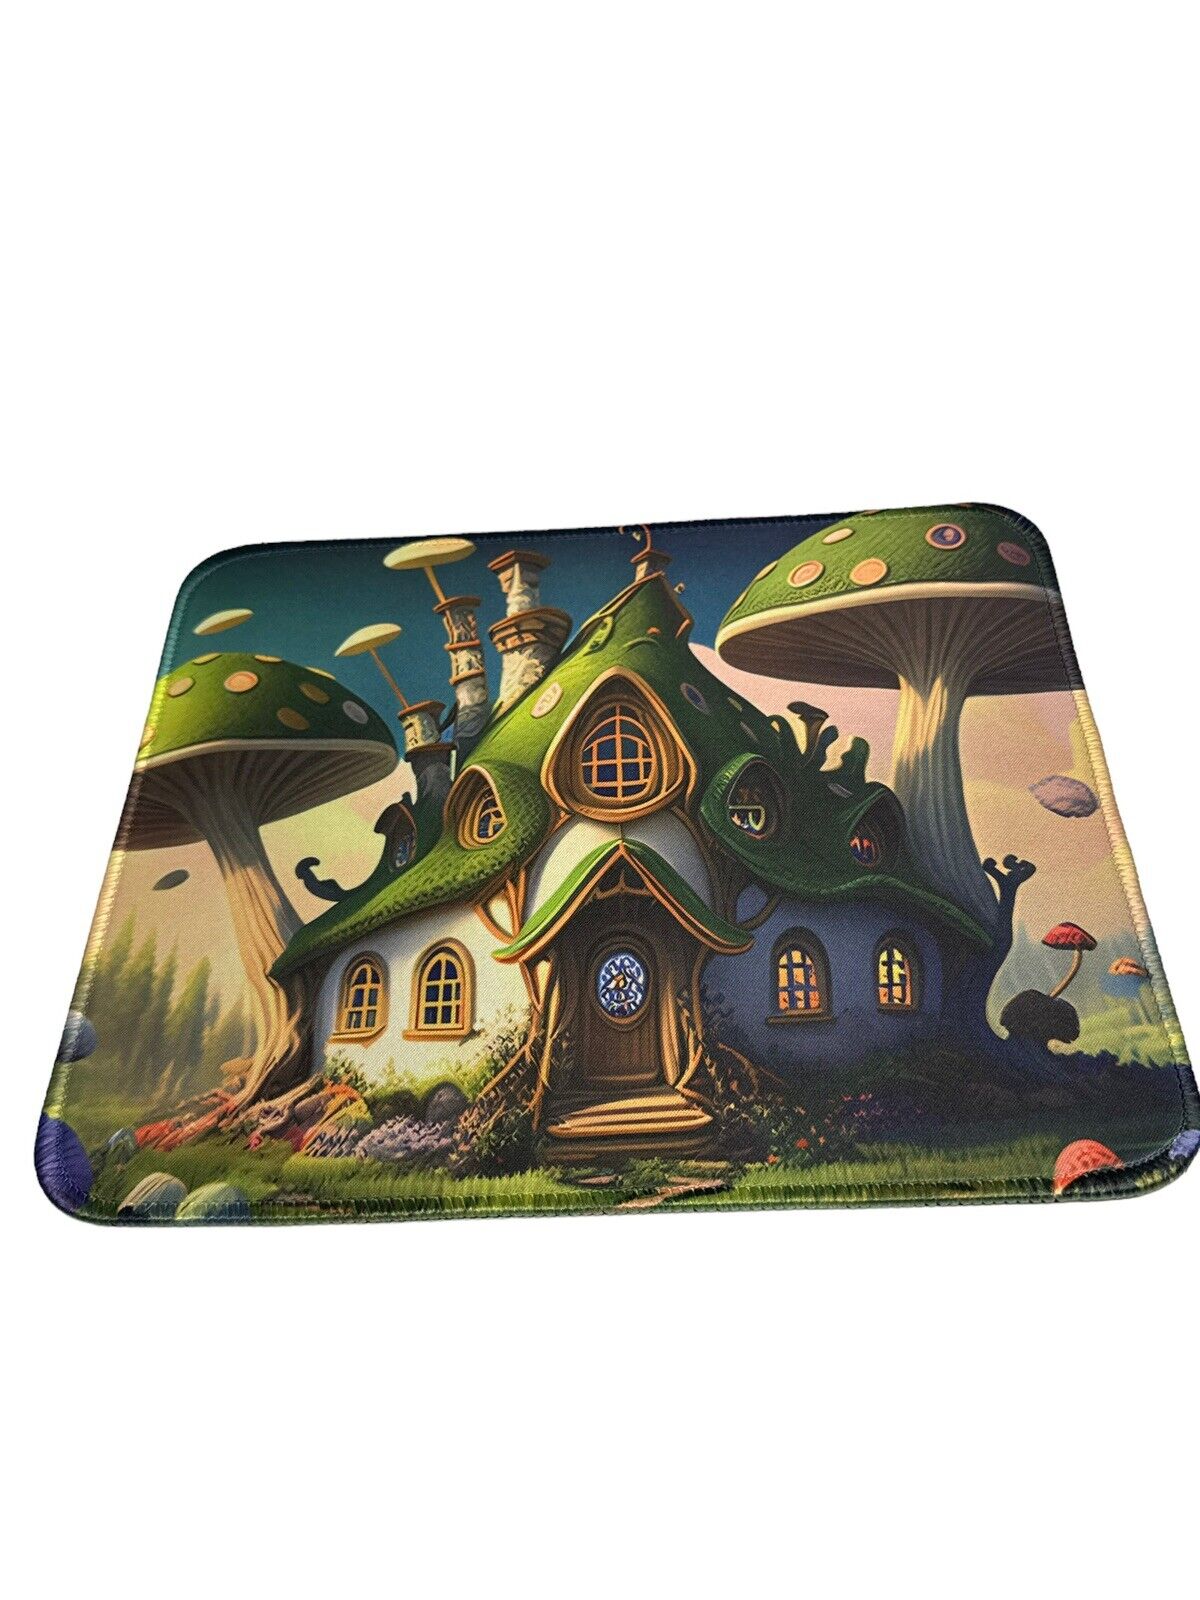 NEW UNUSED Magic Mushroom House Mouse Pad - Fairly Fantasy Theme 